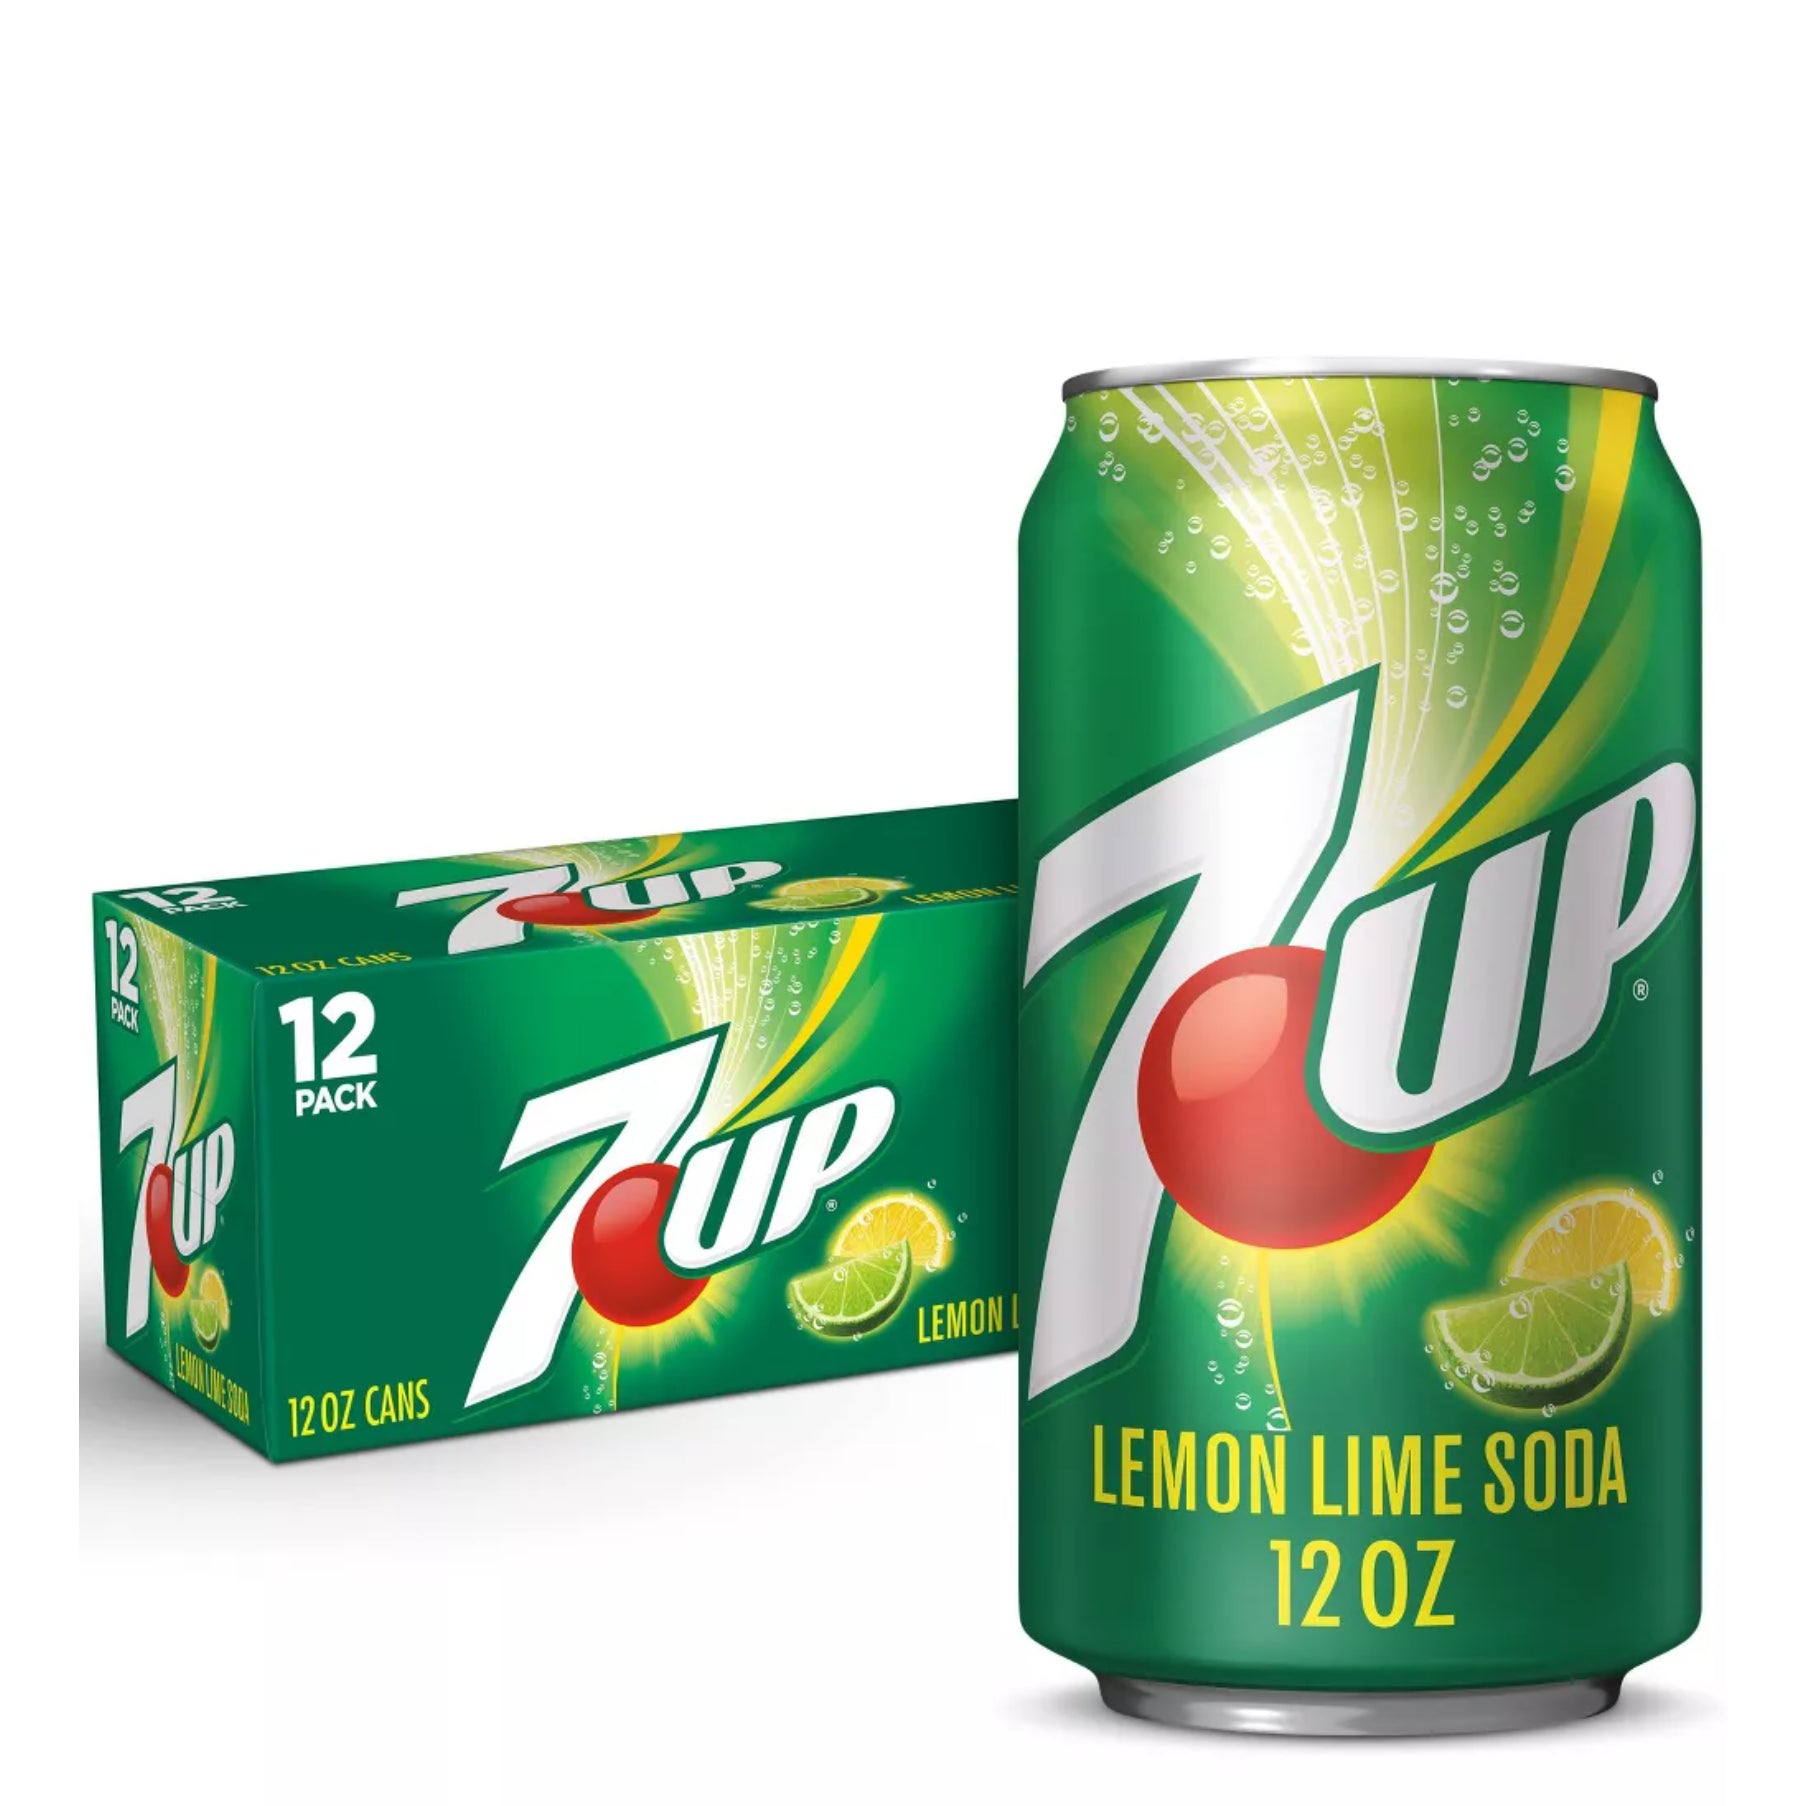 Schweppes Lemon Lime Sparkling Seltzer Water 12 oz Cans